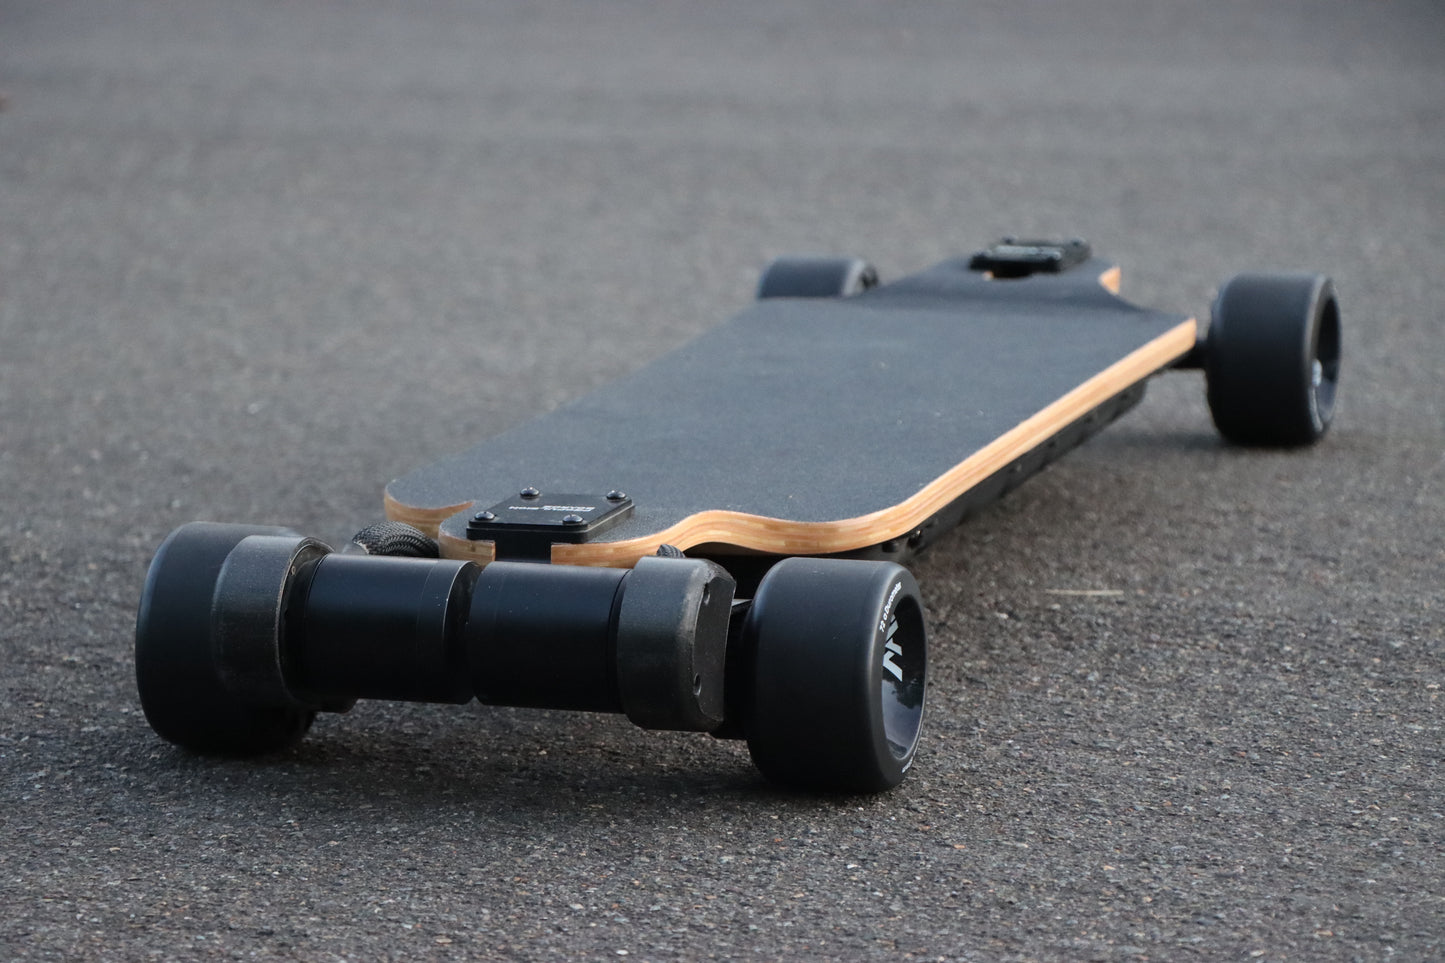 Demon 3.0 Electric Skateboard Kit